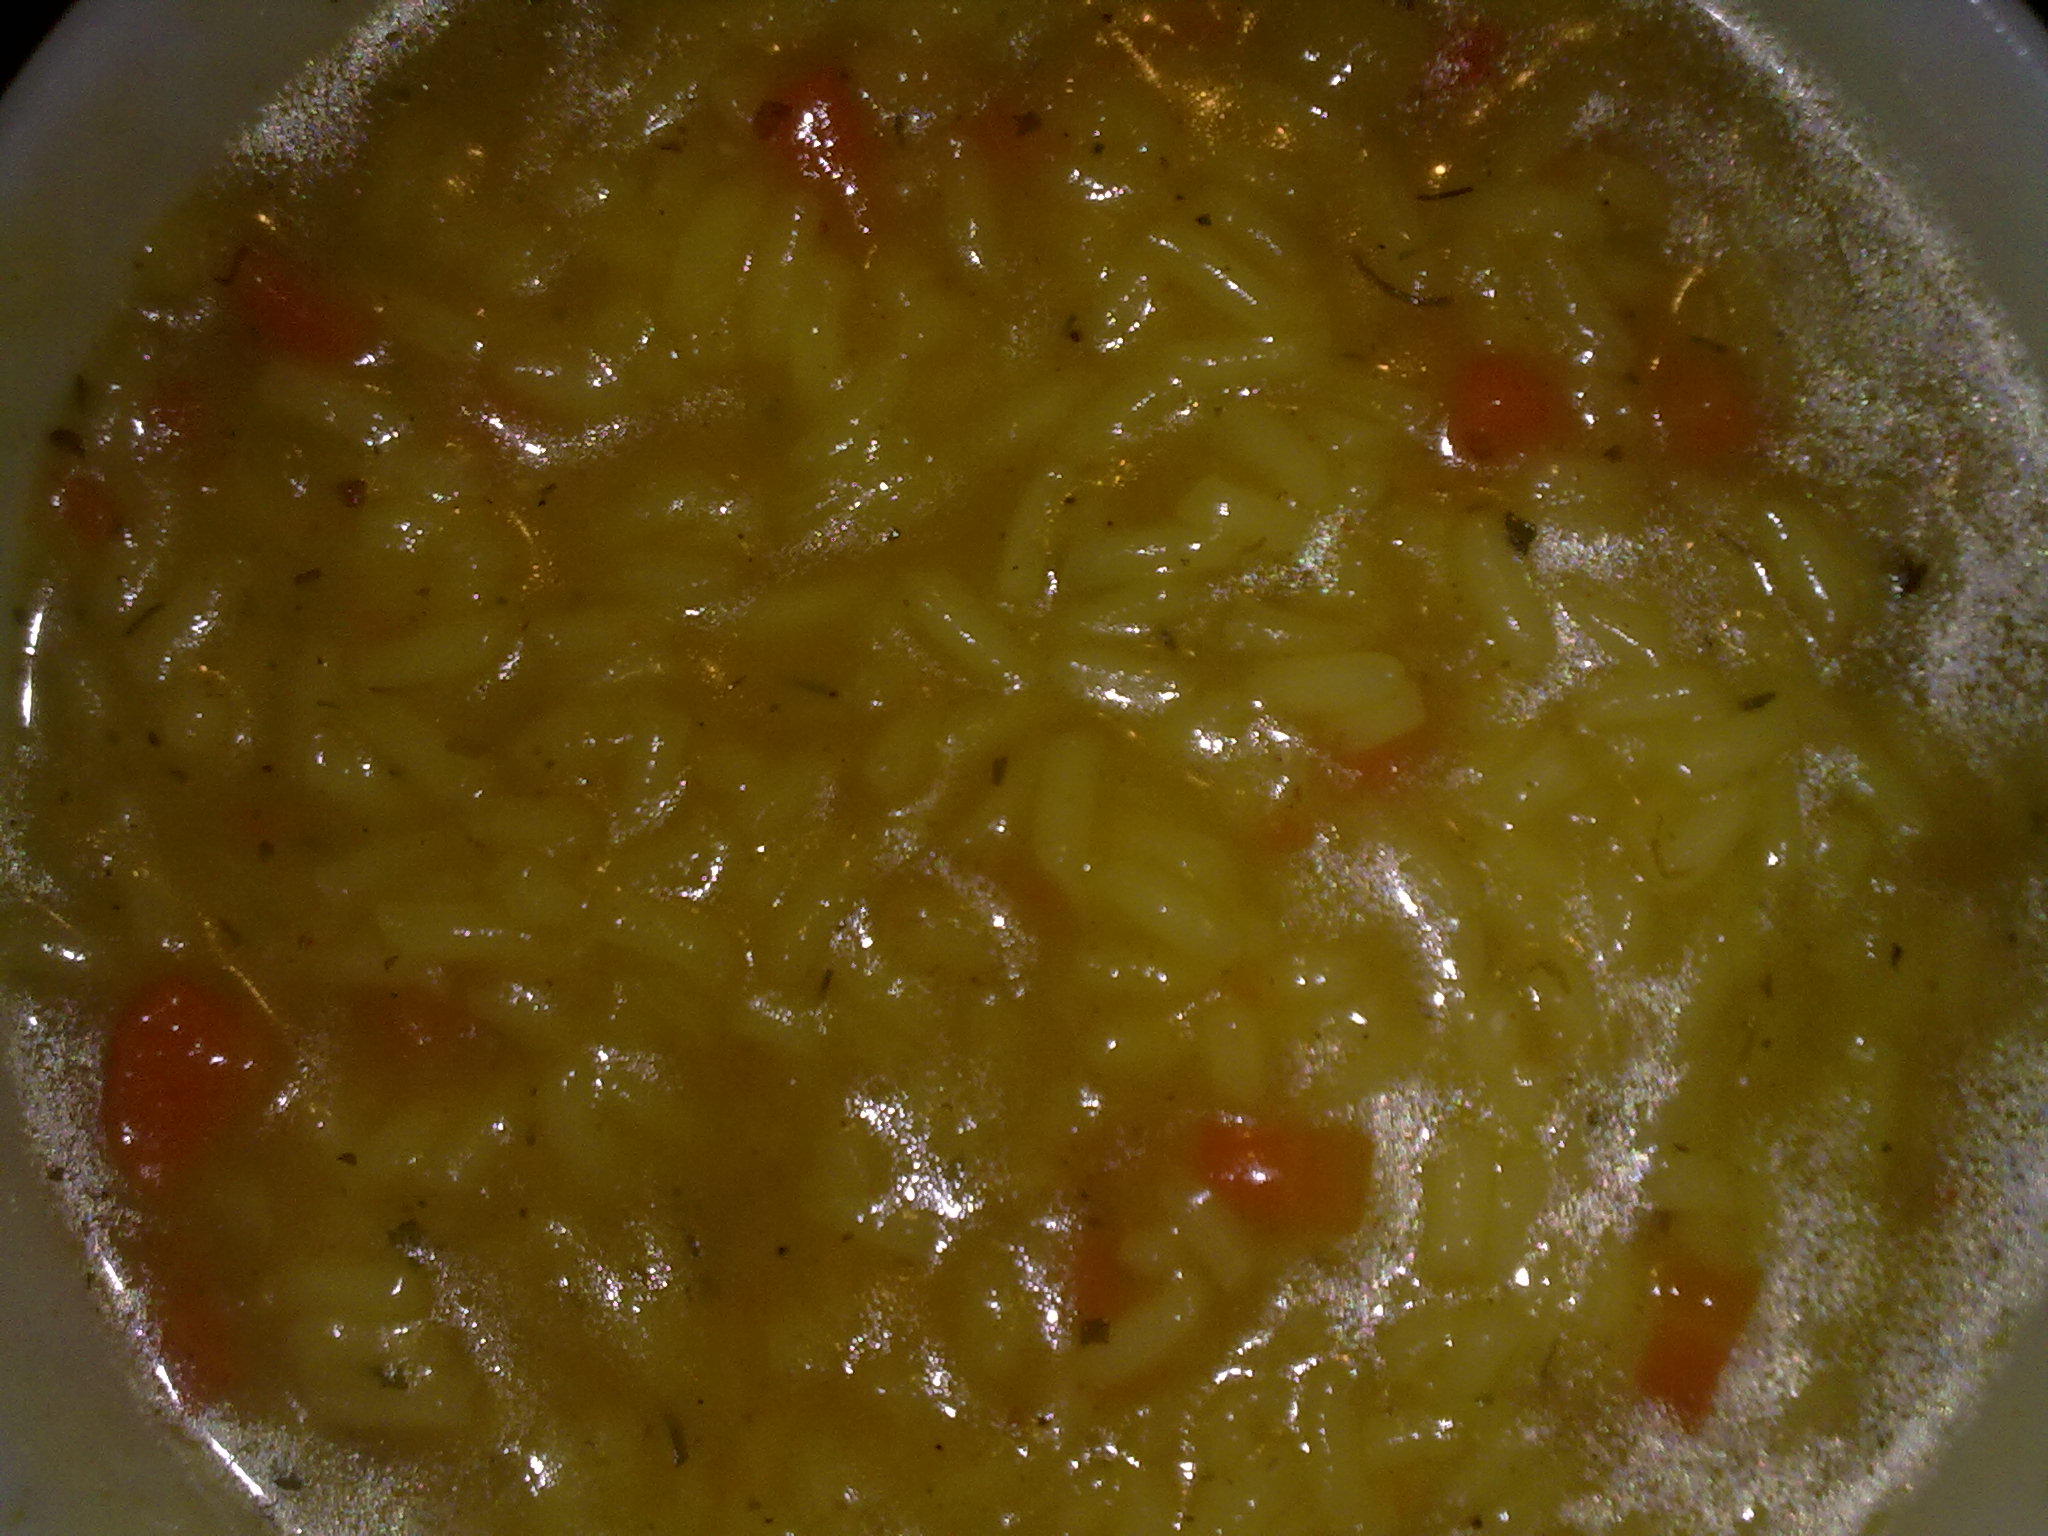 Orez fiert in supa de pui cu legume